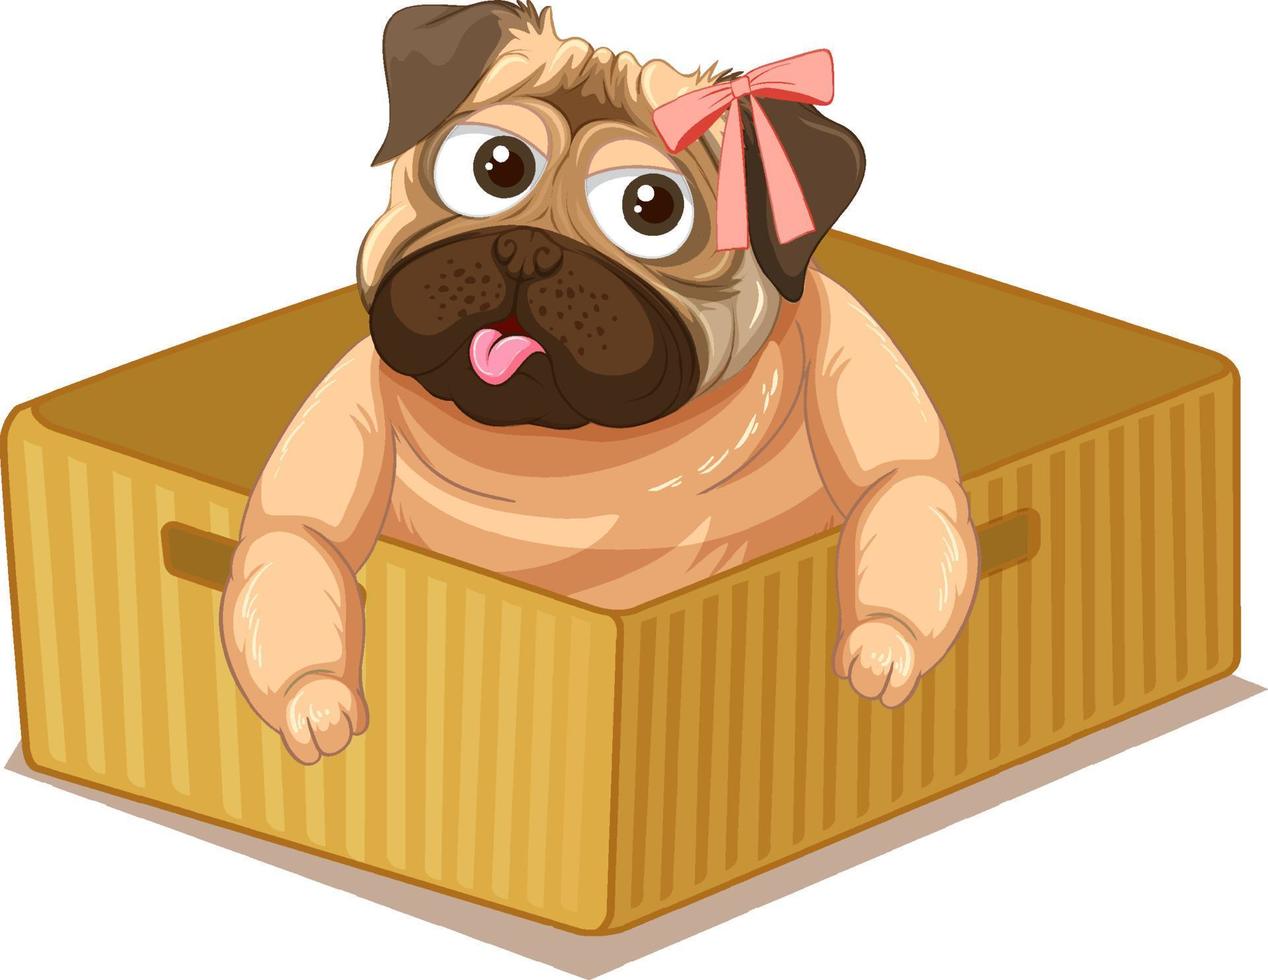 Cute pug dog in a box cartoon vector